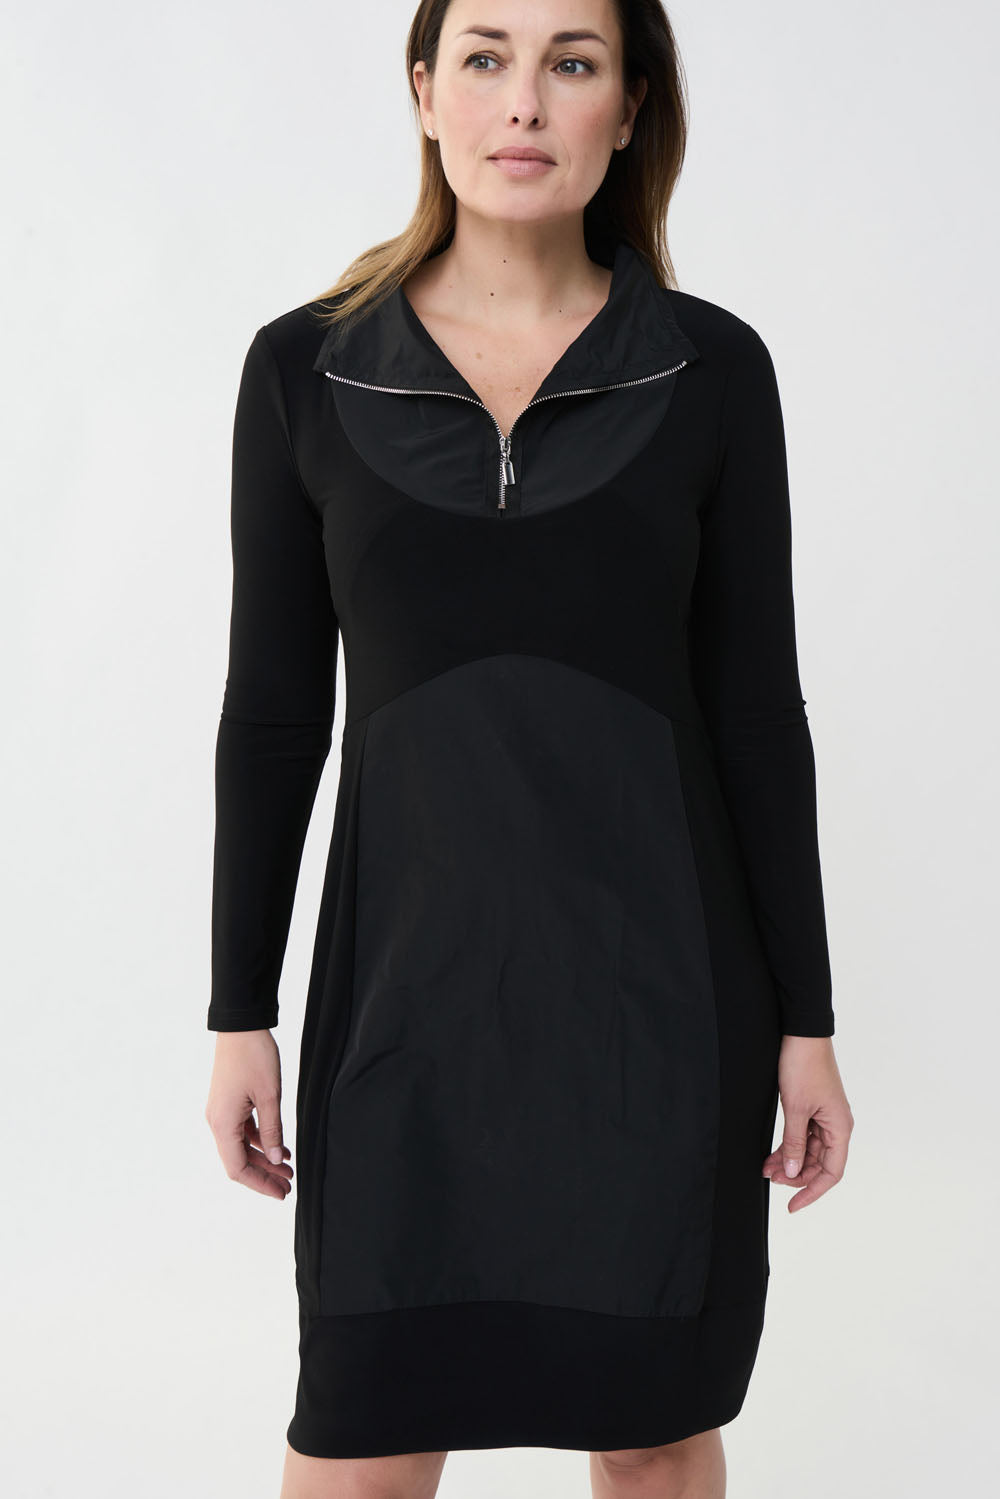 Joseph Ribkoff Black Half Zip Dress  Style 223197